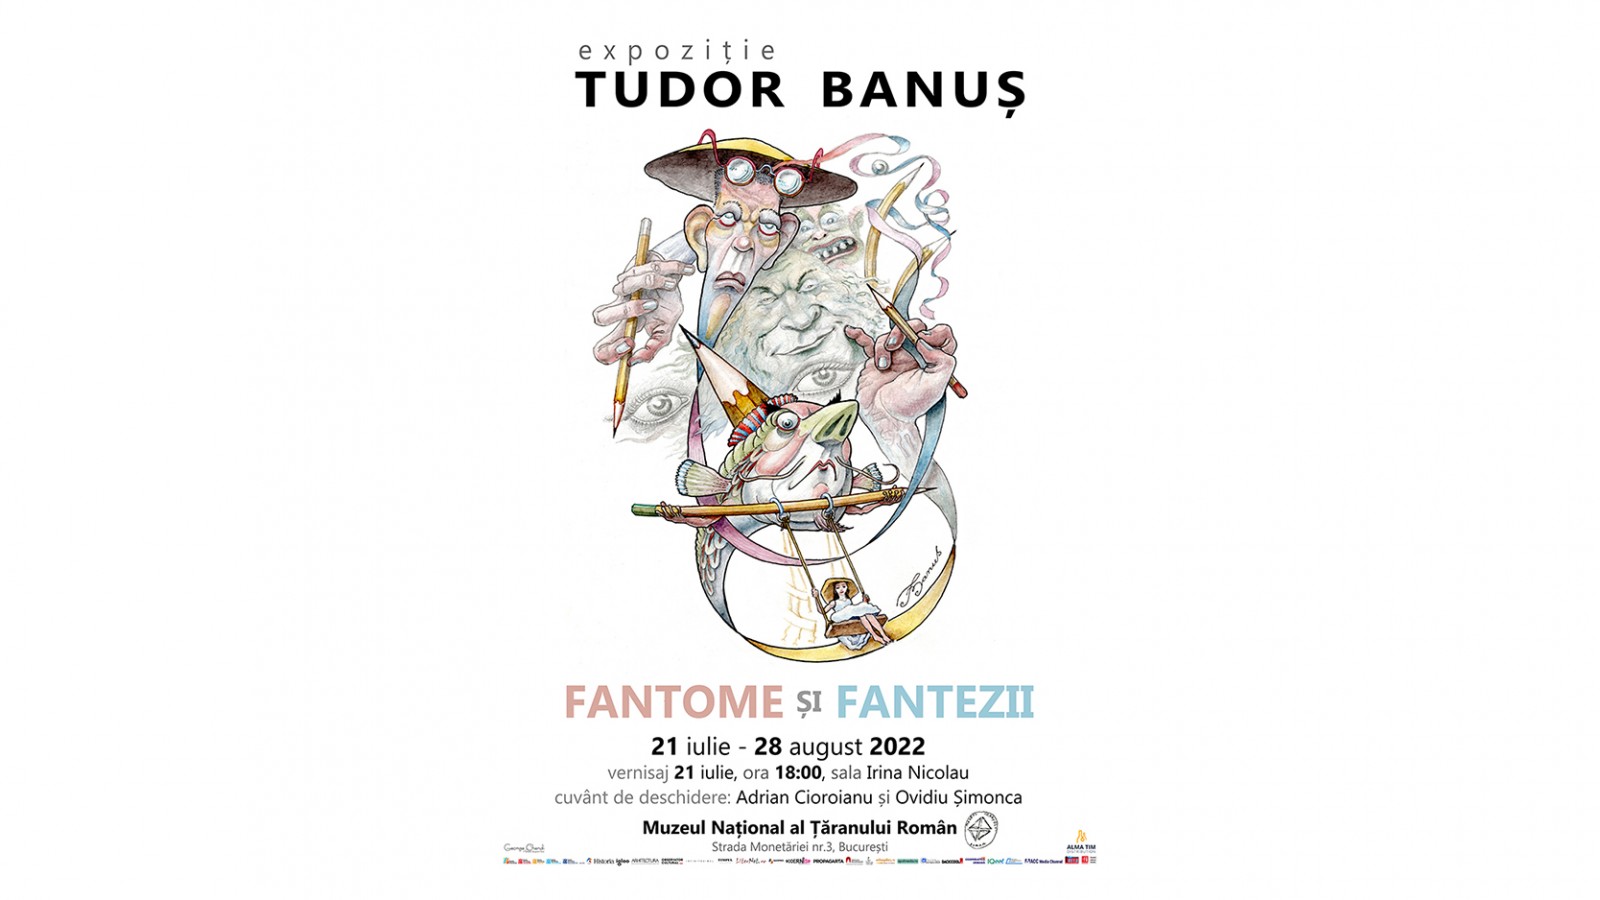 FANTOME SI FANTEZII - Expozitie Tudor Banus